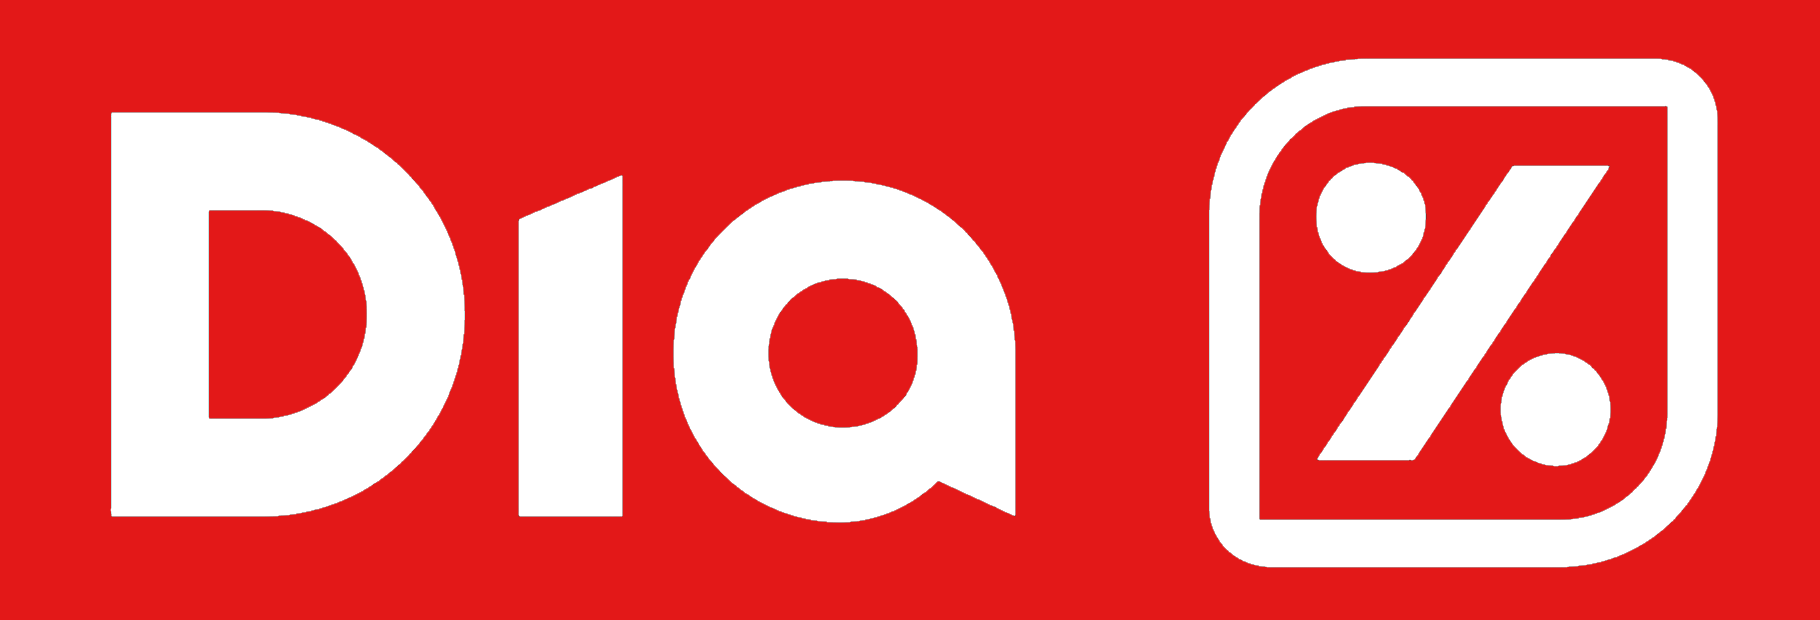 DIA Logo - Dia (supermarket) – Logos Download